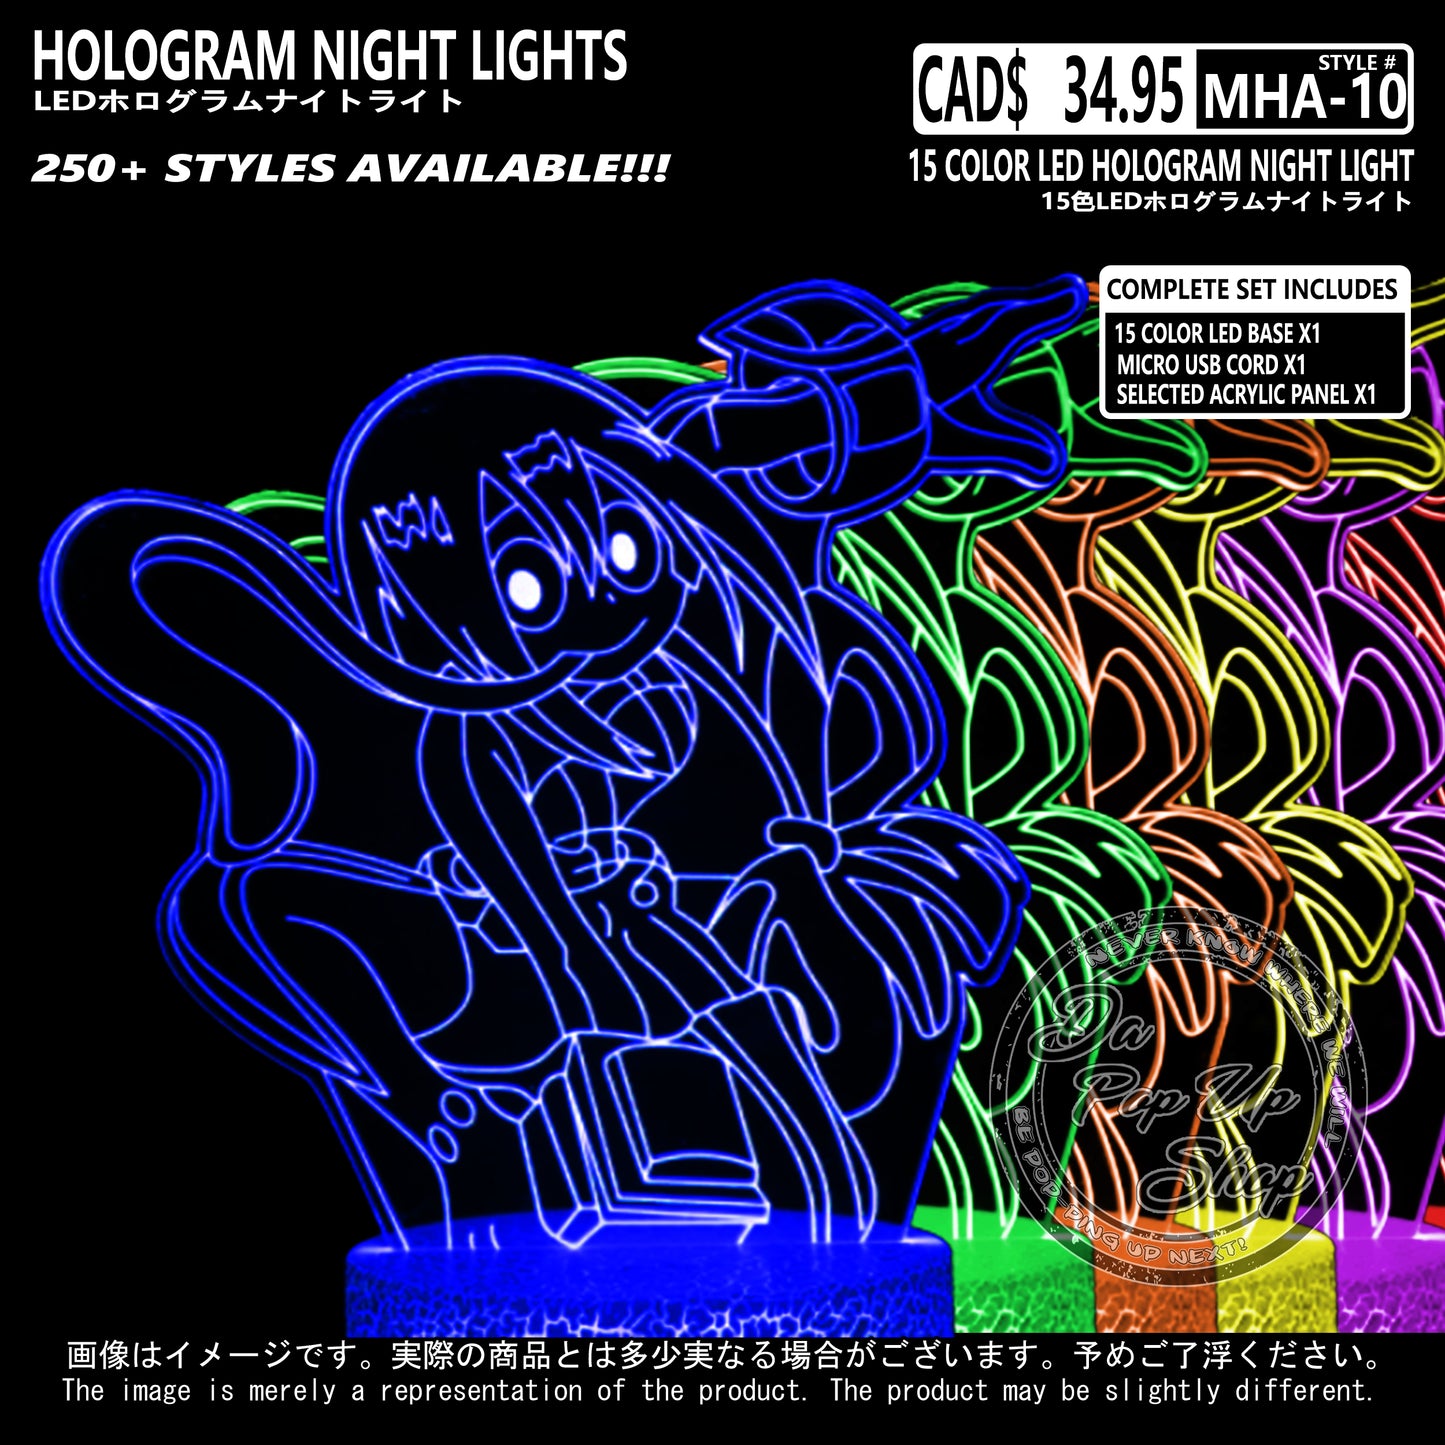 (MHA-10) My Hero Academia Hologram LED Night Light